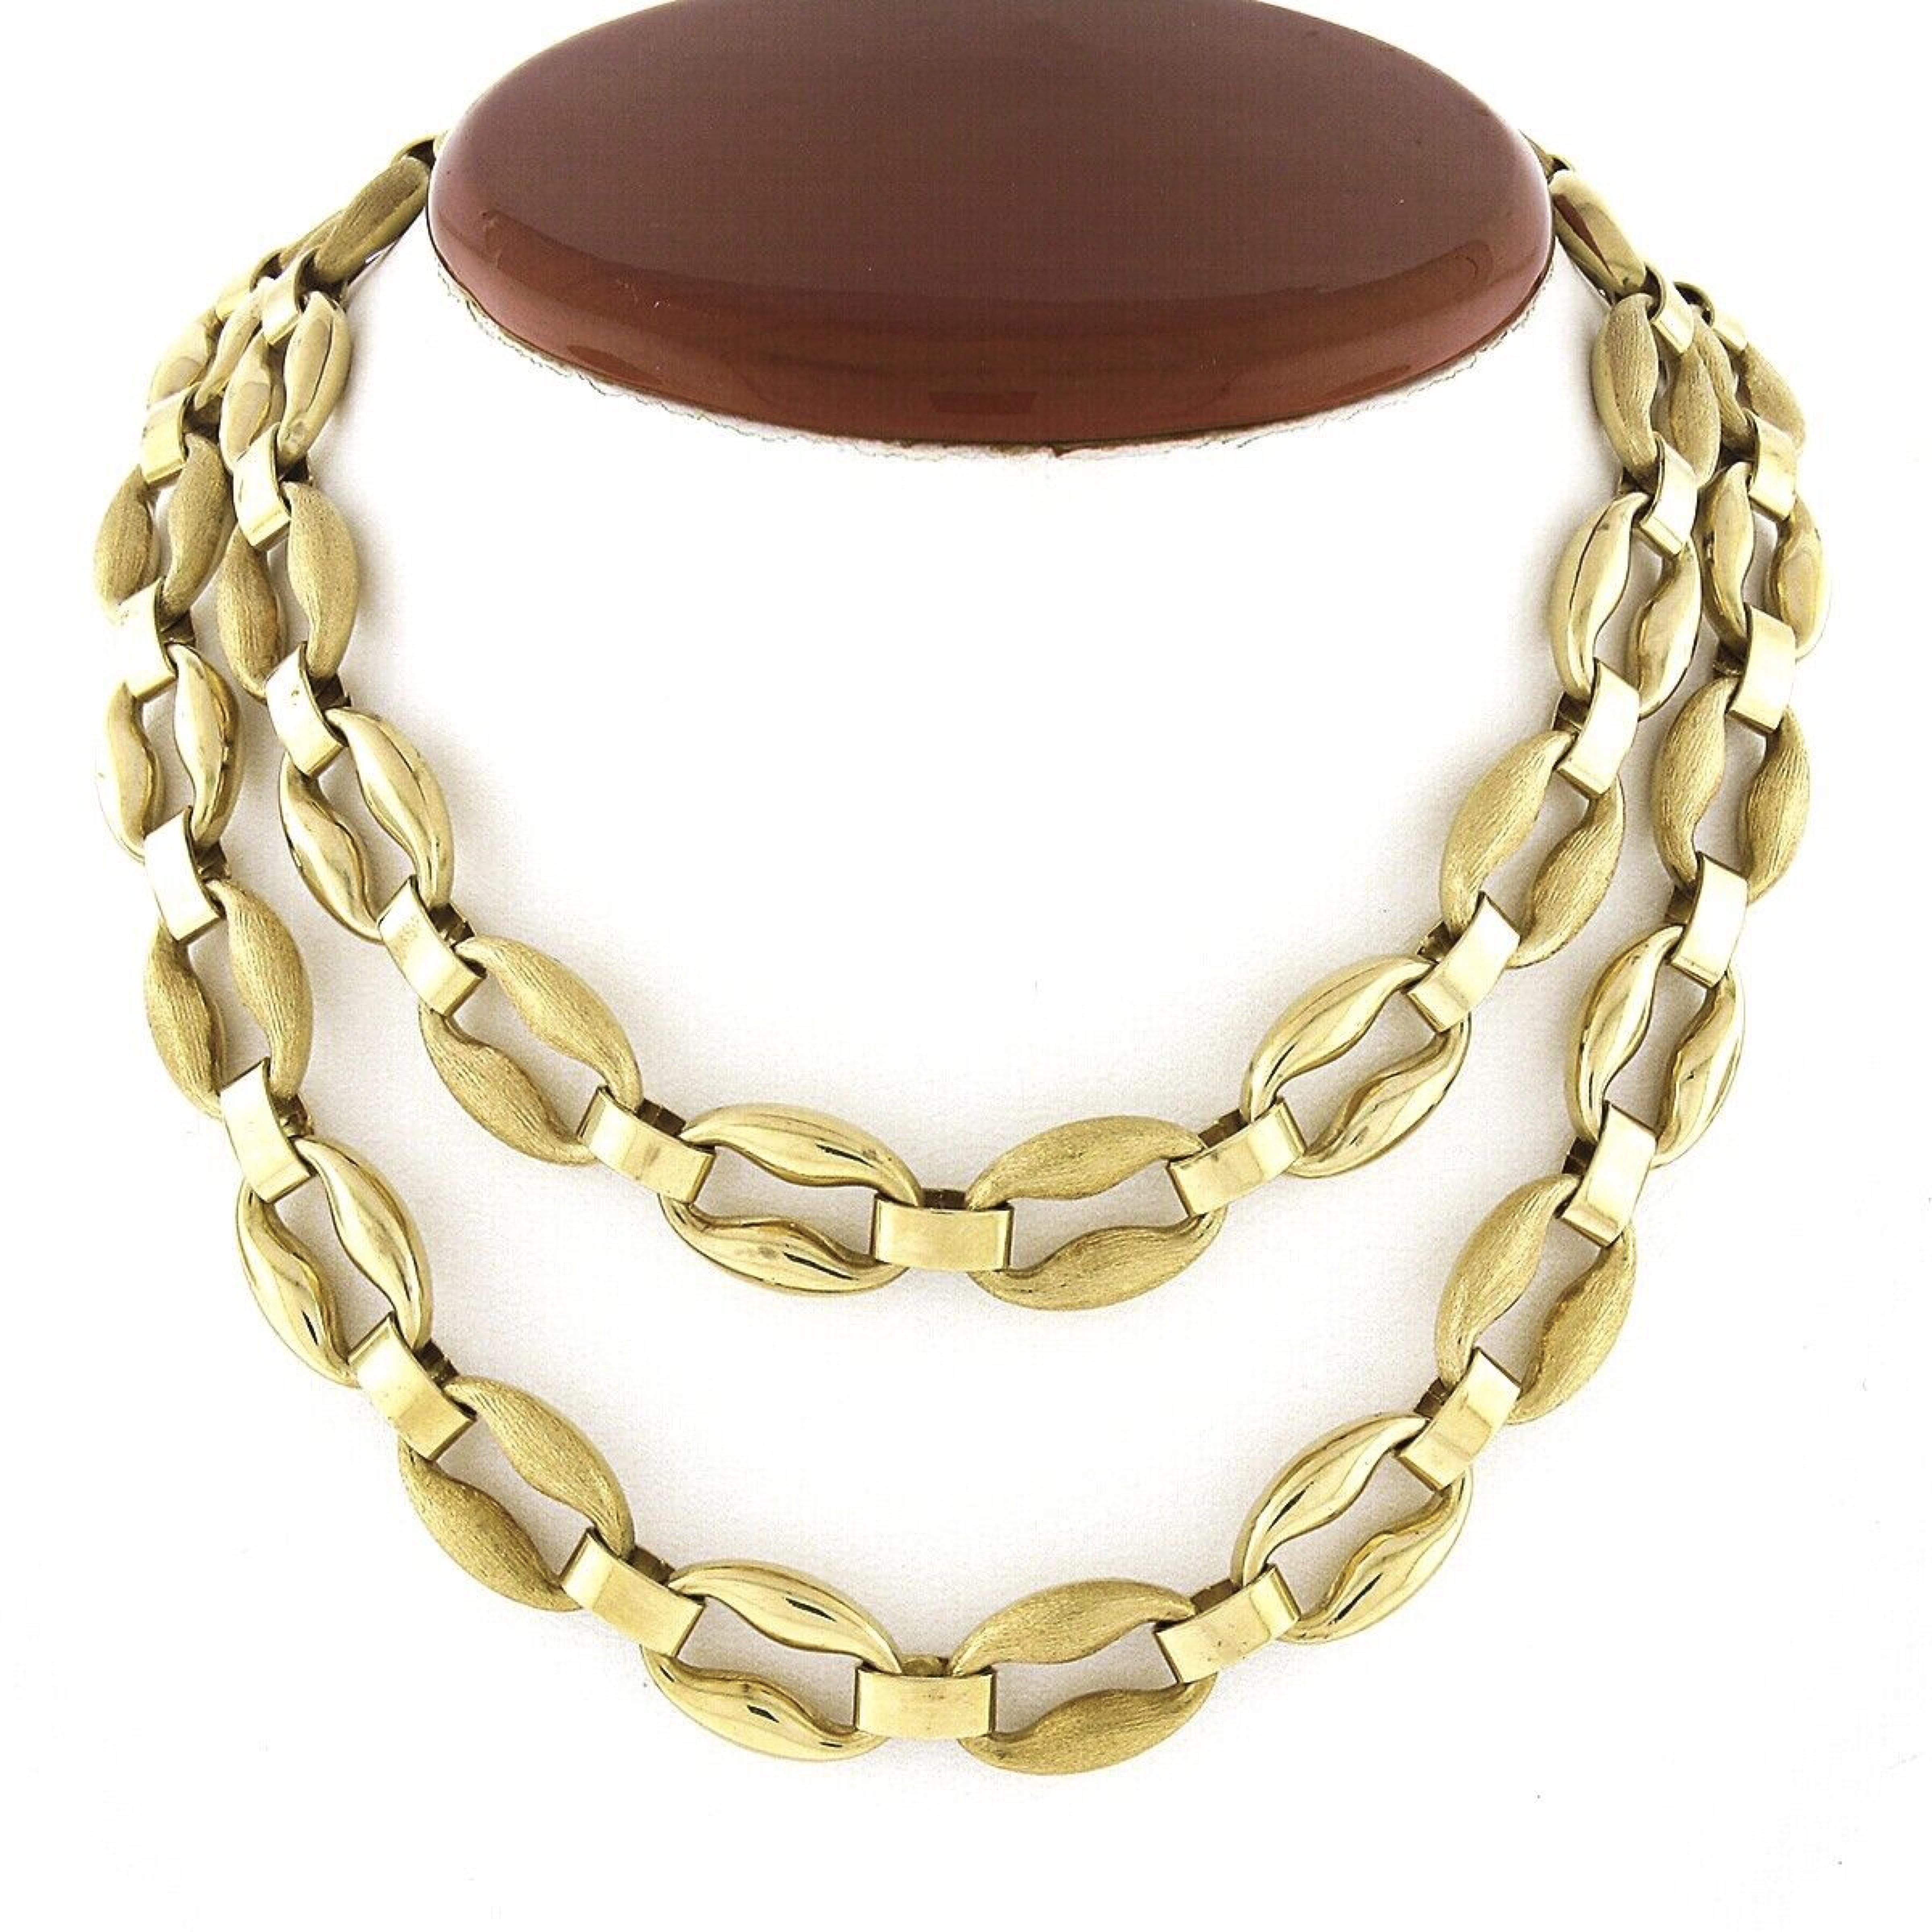 Fancy 18K Gold Long Alternating Polished & Brushed Oval Link Chain Necklace